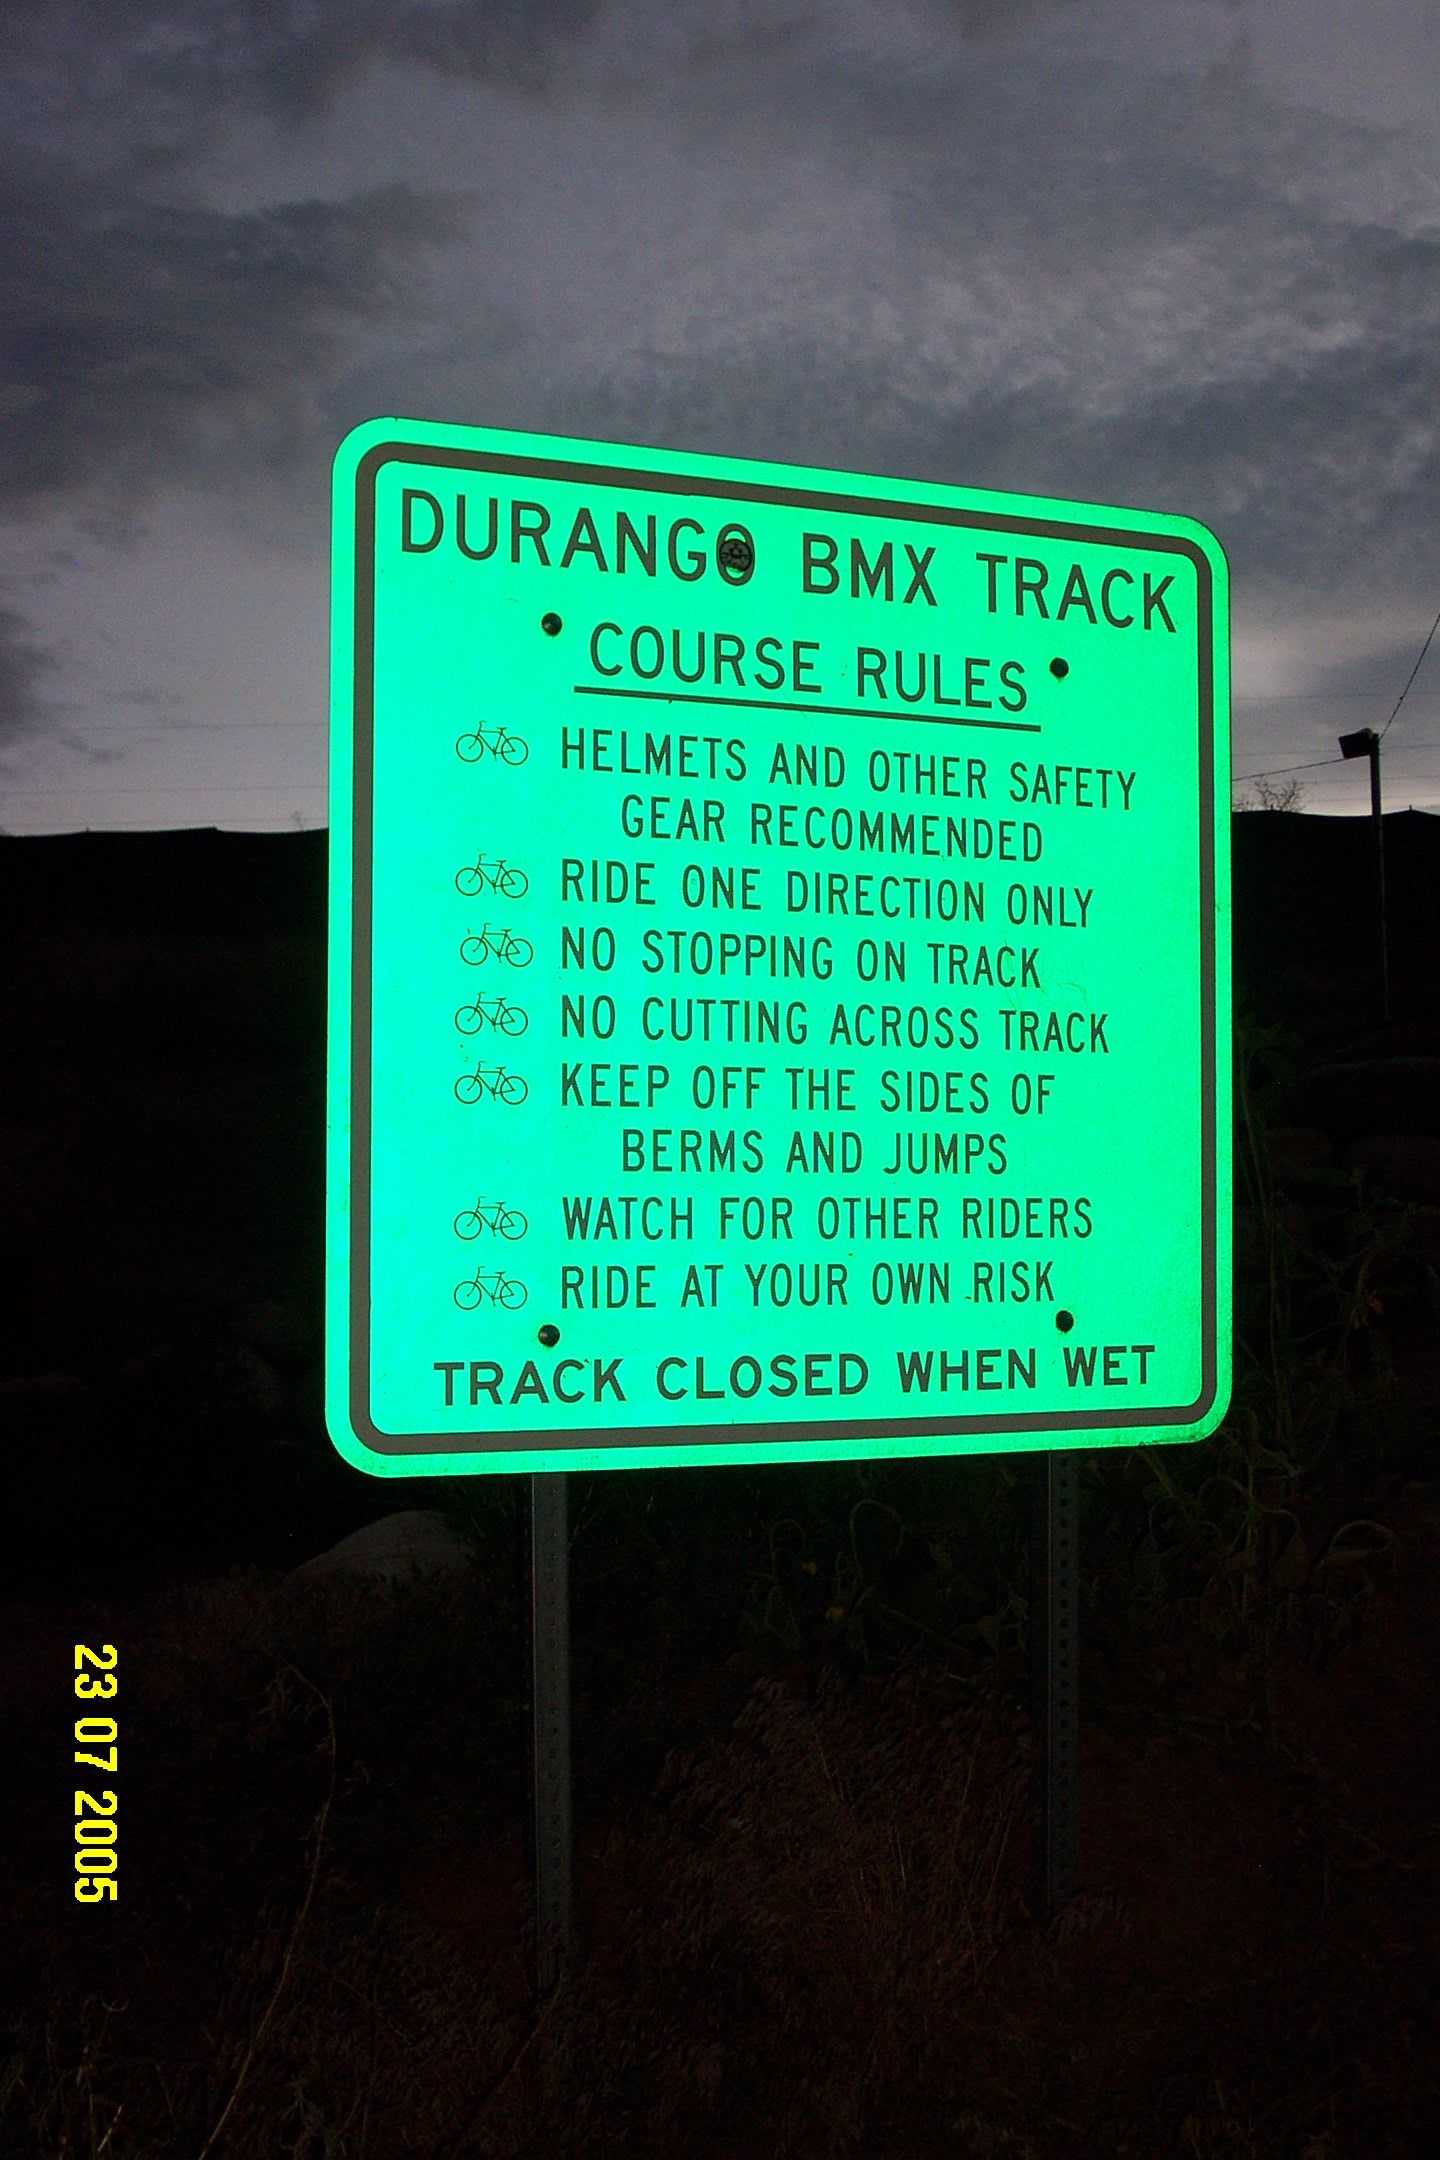 BMX track in Durango